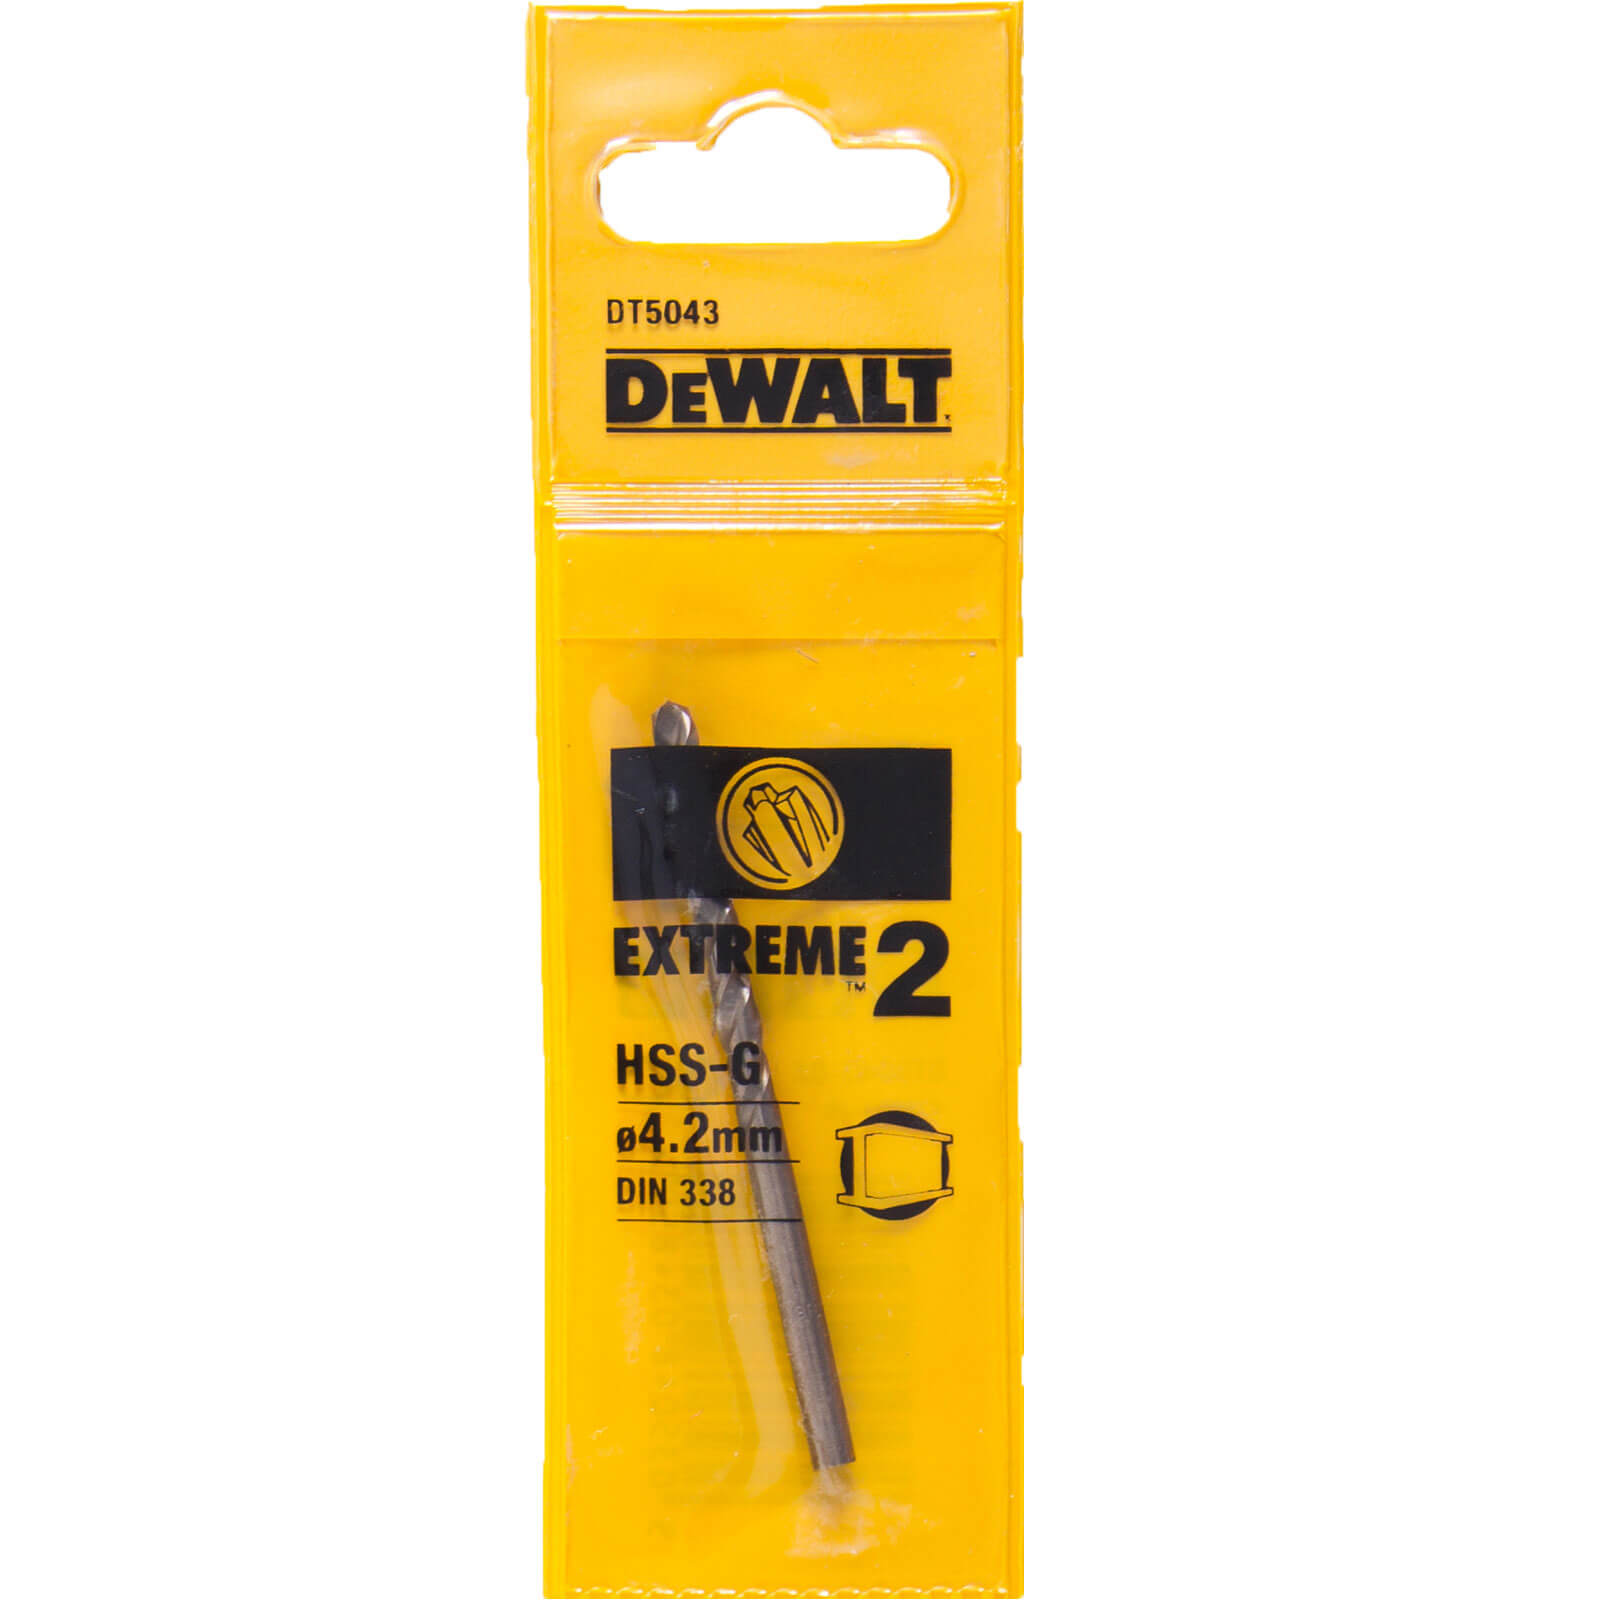 Photos - Drill Bit DeWALT Extreme 2 Metal  4.2mm Pack of 1 DT5043 